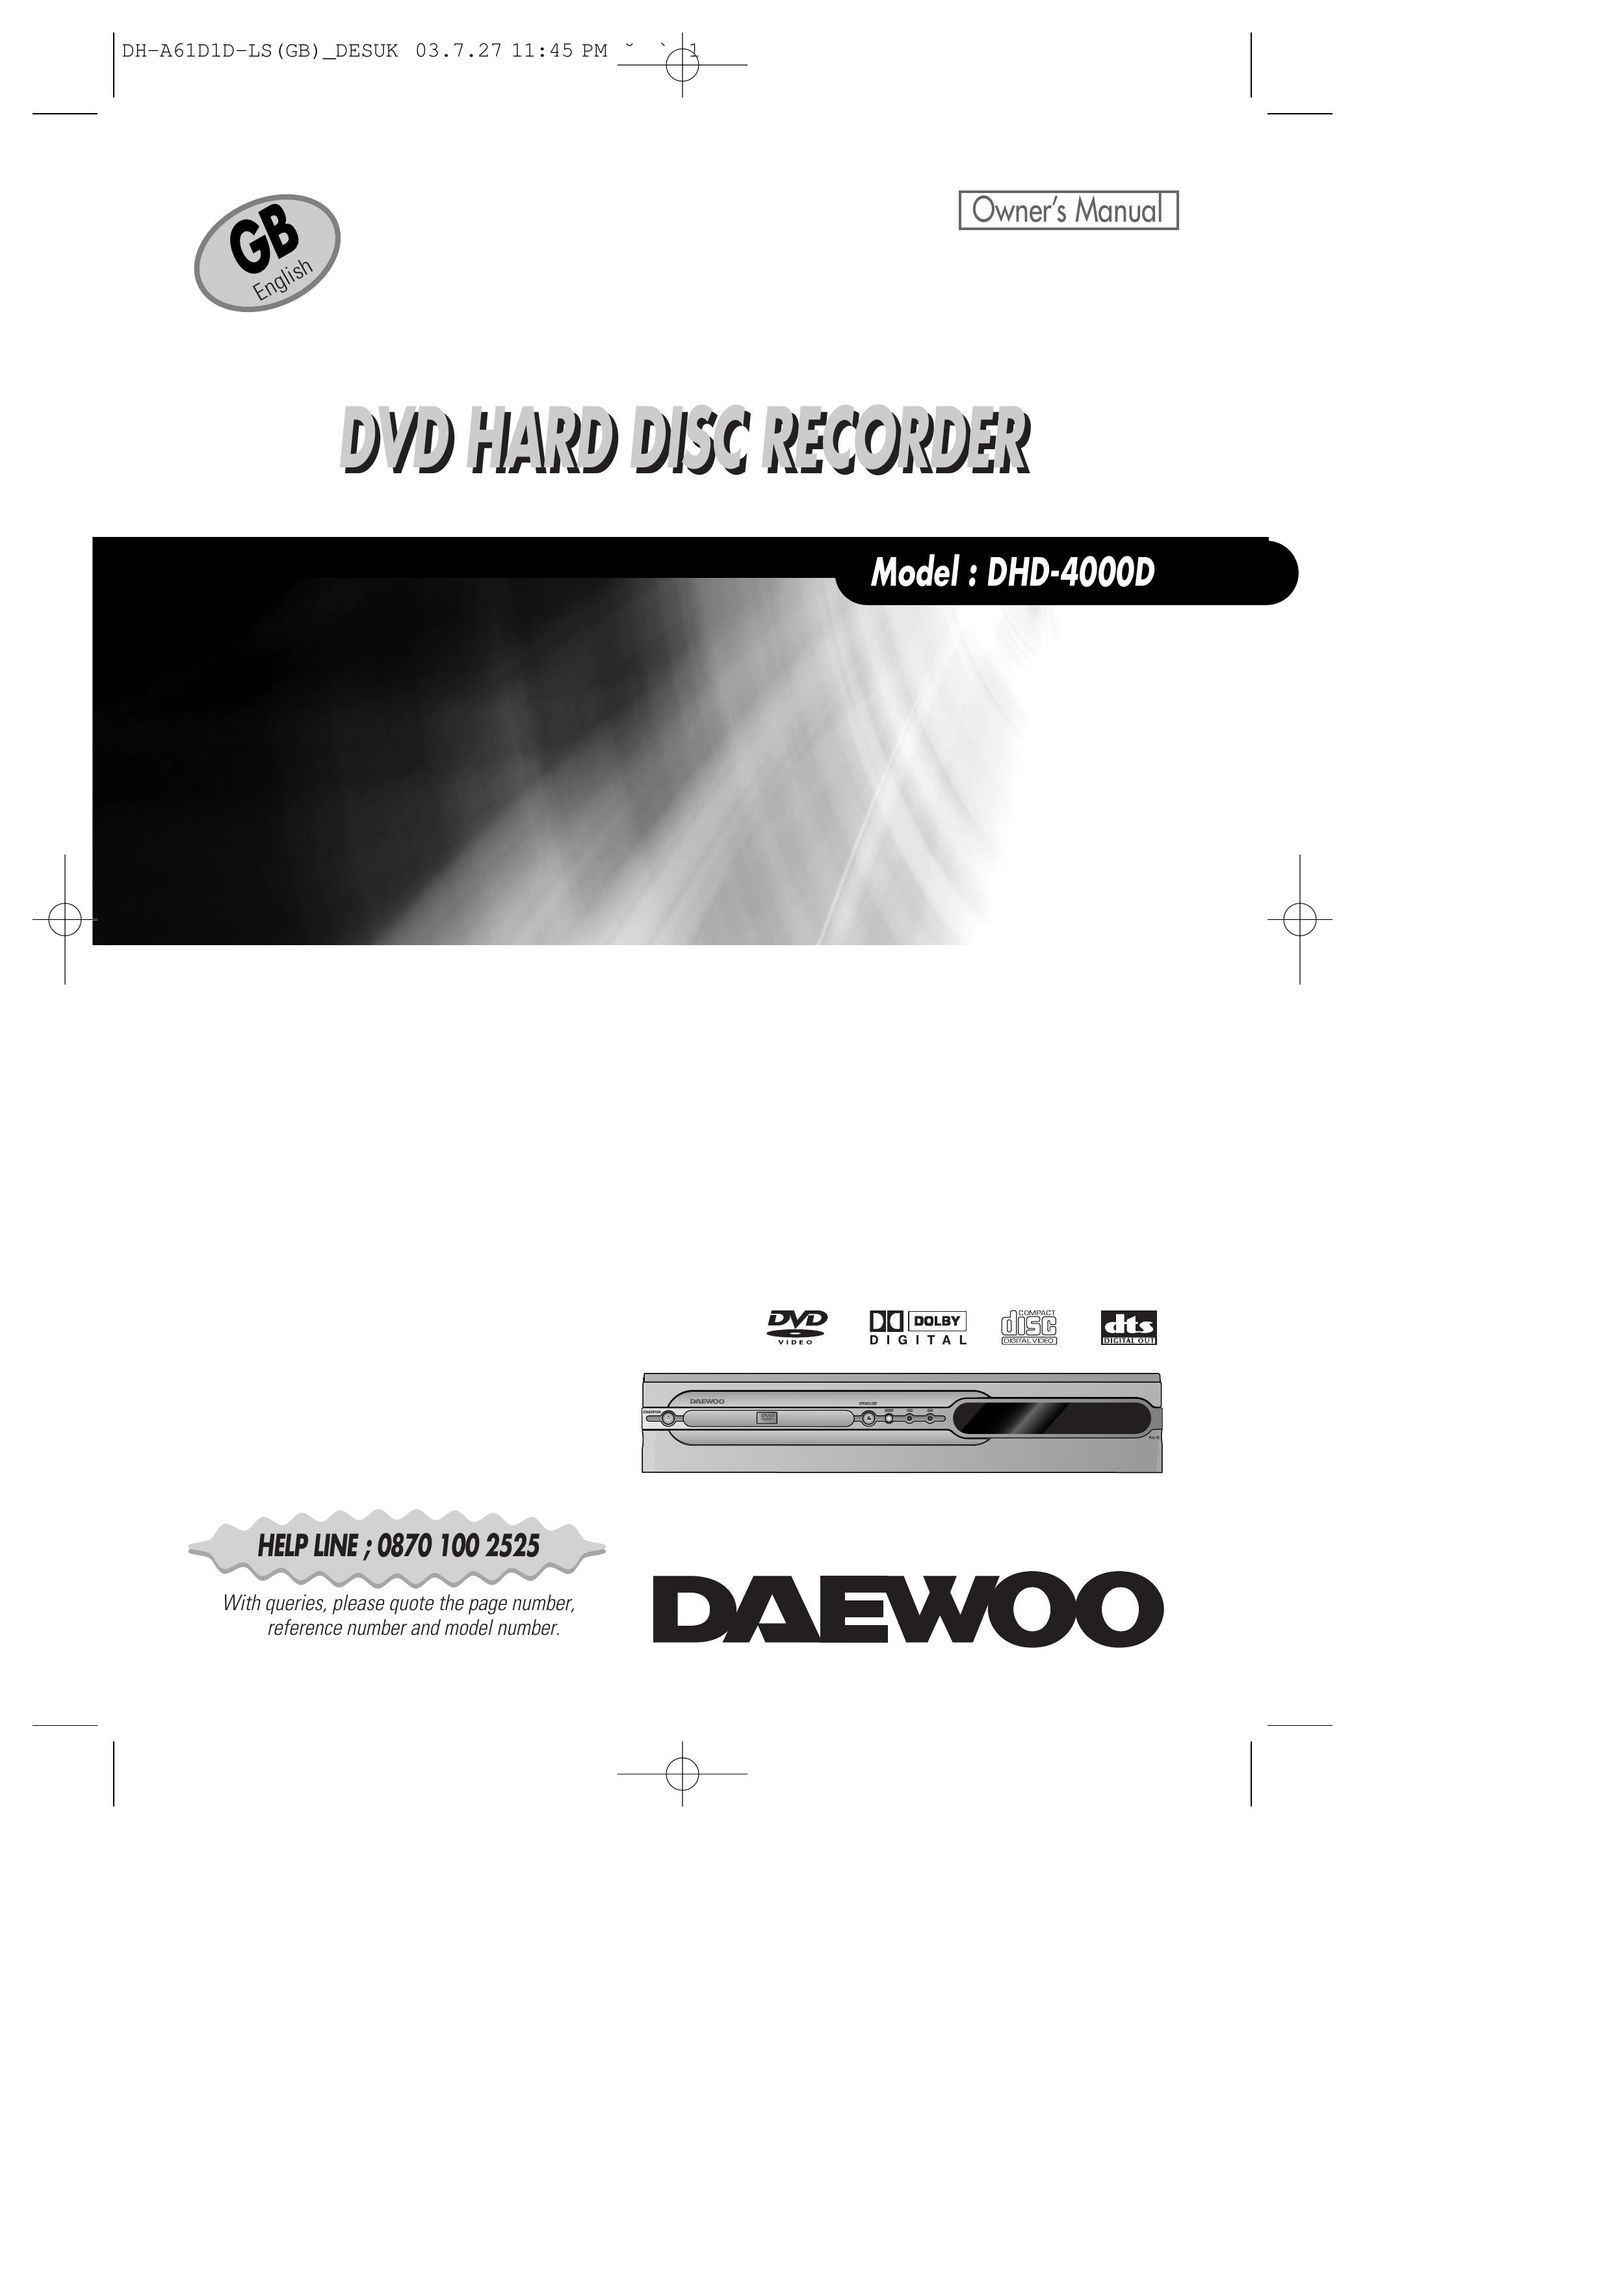 Daewoo DHD-4000D DVD Recorder User Manual